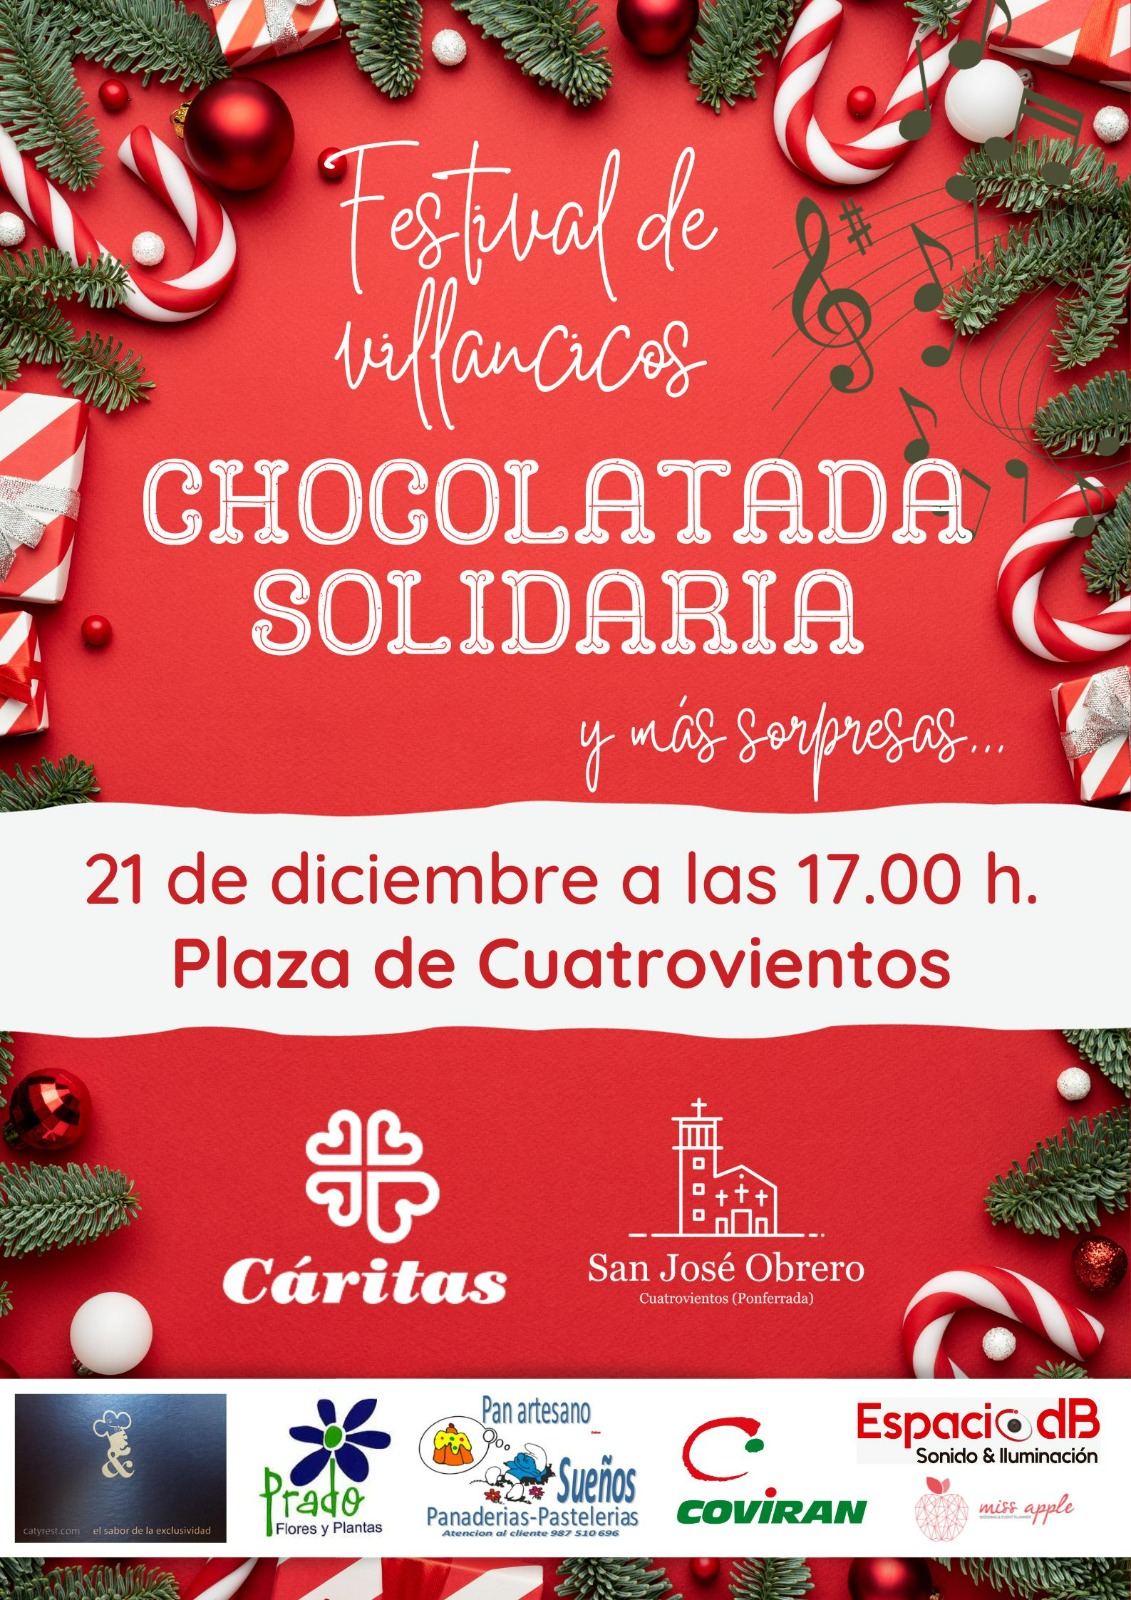 La parroquia de San José Obrero de Ponferrada organiza una chocolatada solidaria a favor de Cáritas mañana jueves 21 de diciembre 2